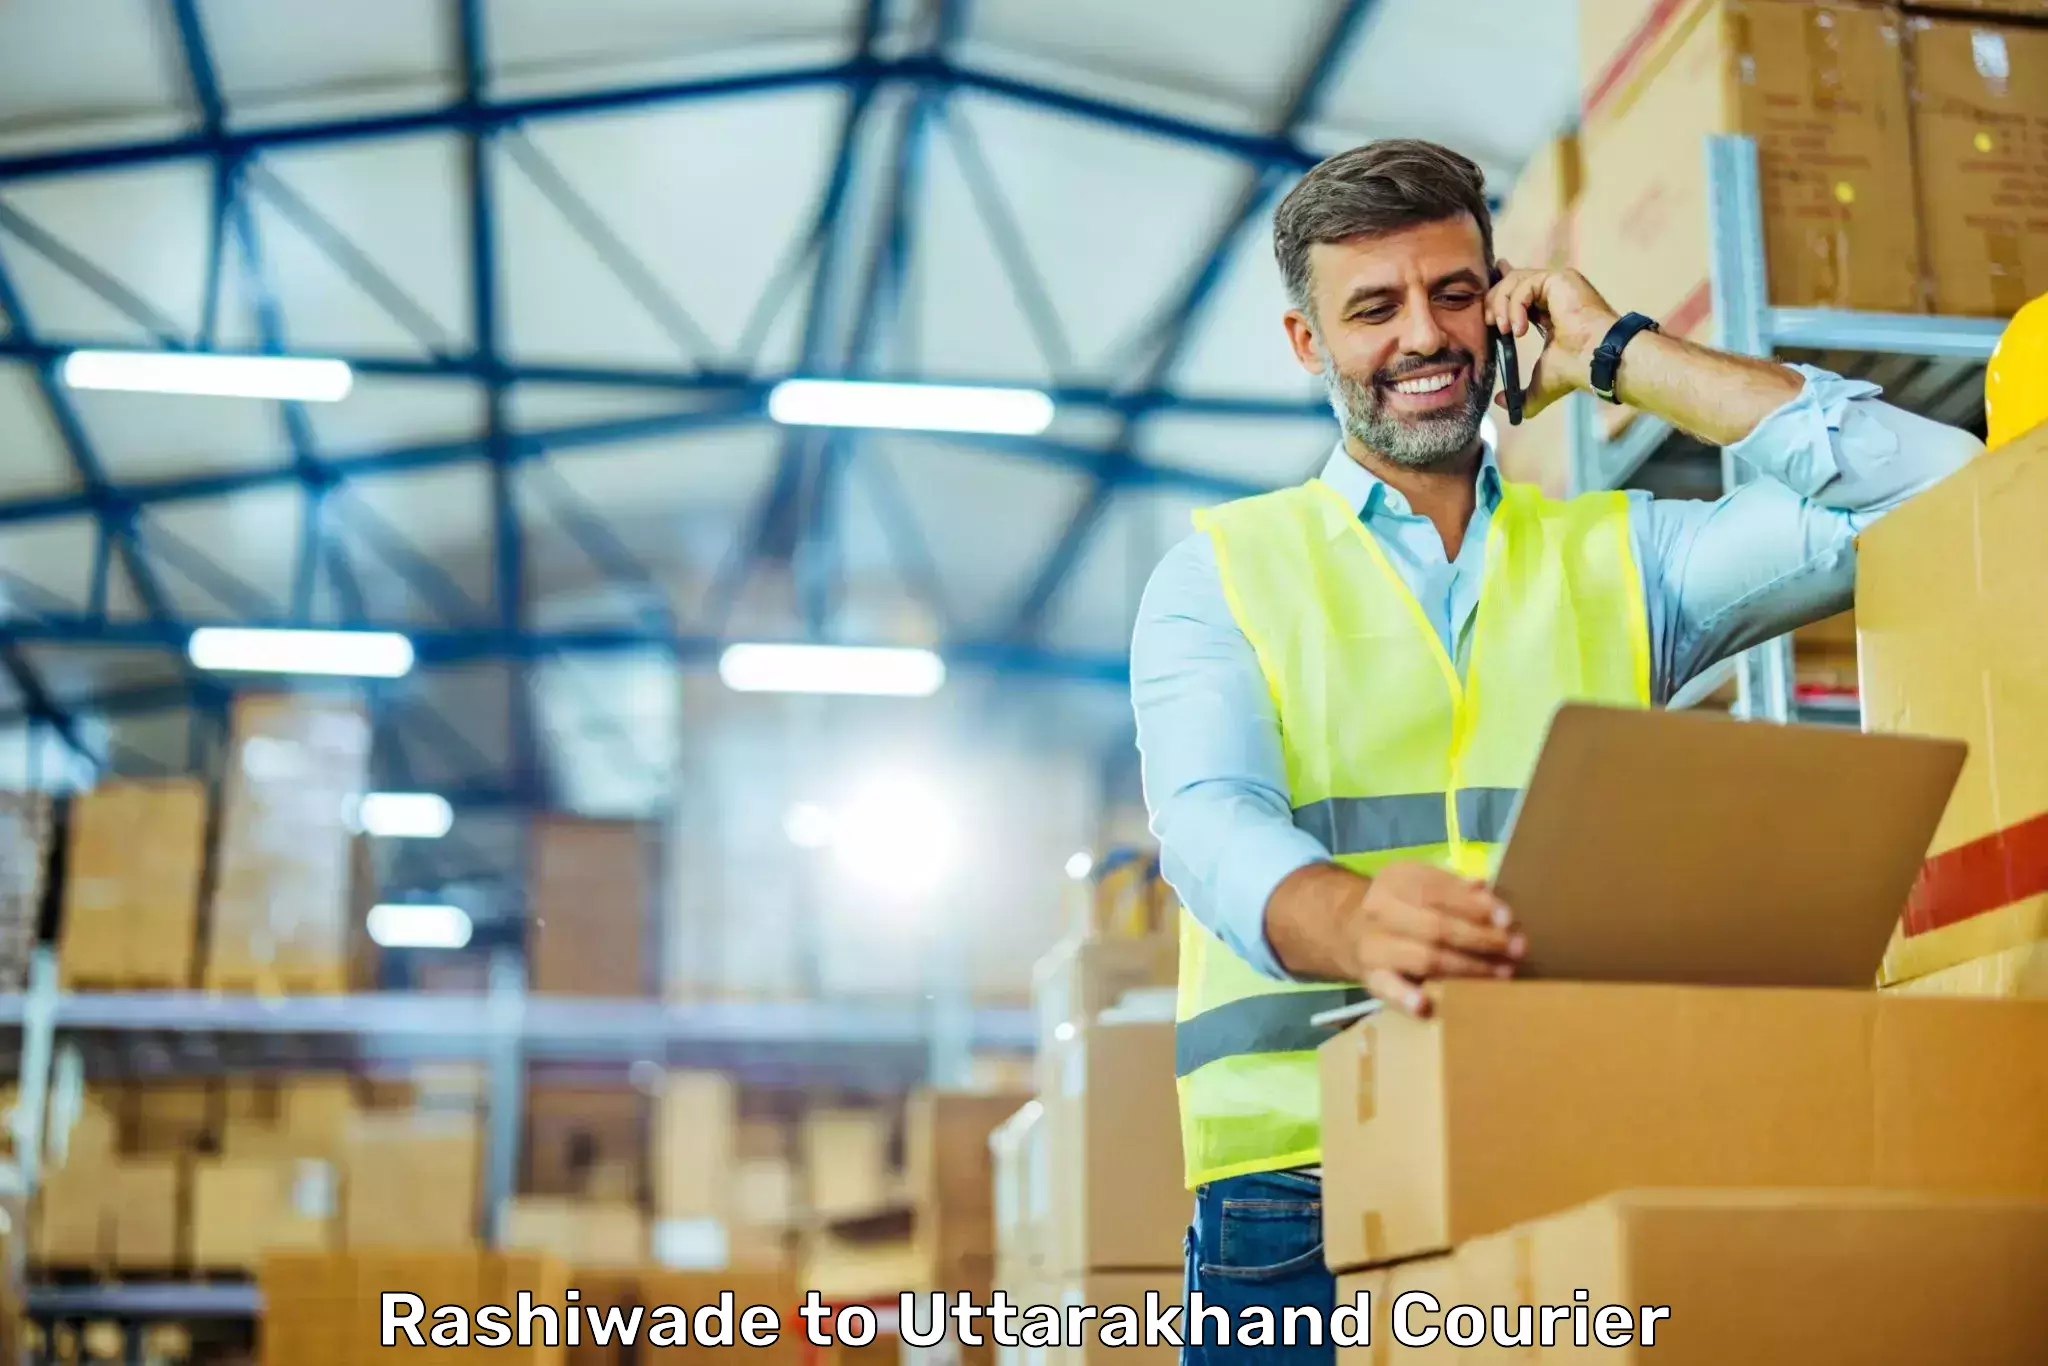 Courier service comparison Rashiwade to Uttarakhand